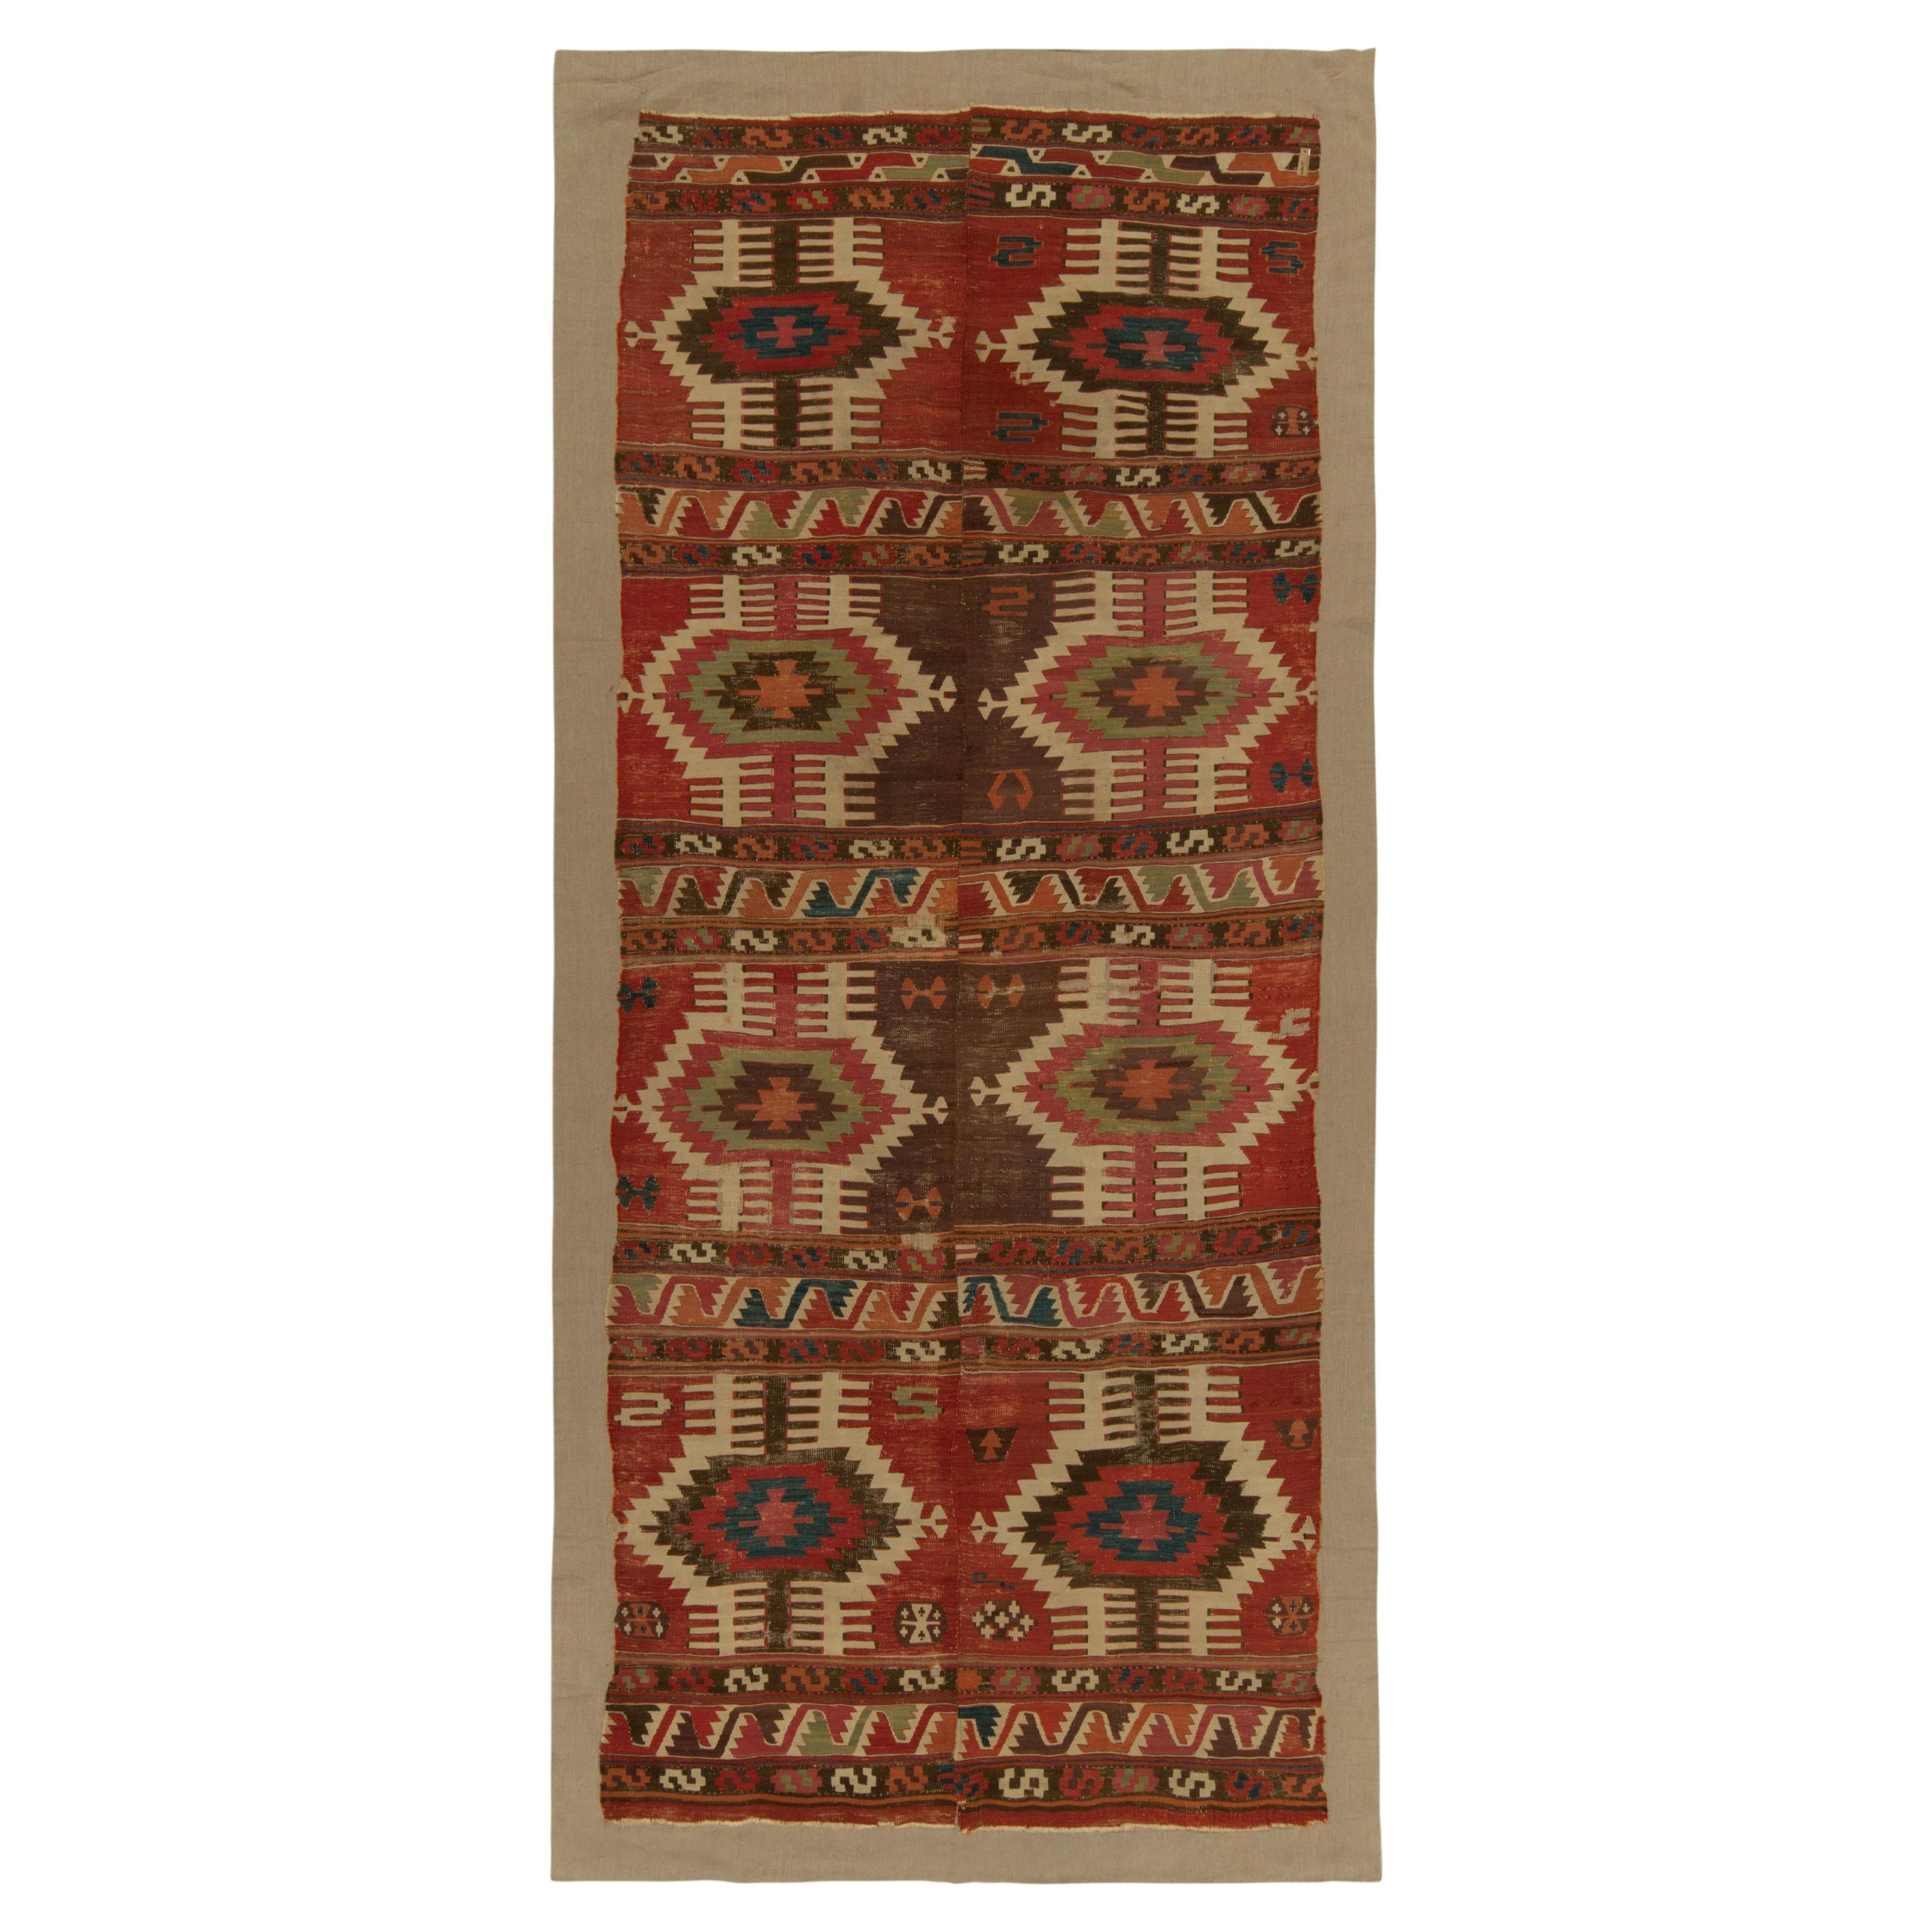 Antique Tribal Kilim rug in Red, Beige-Brown Geometric Pattern by Rug & Kilim For Sale